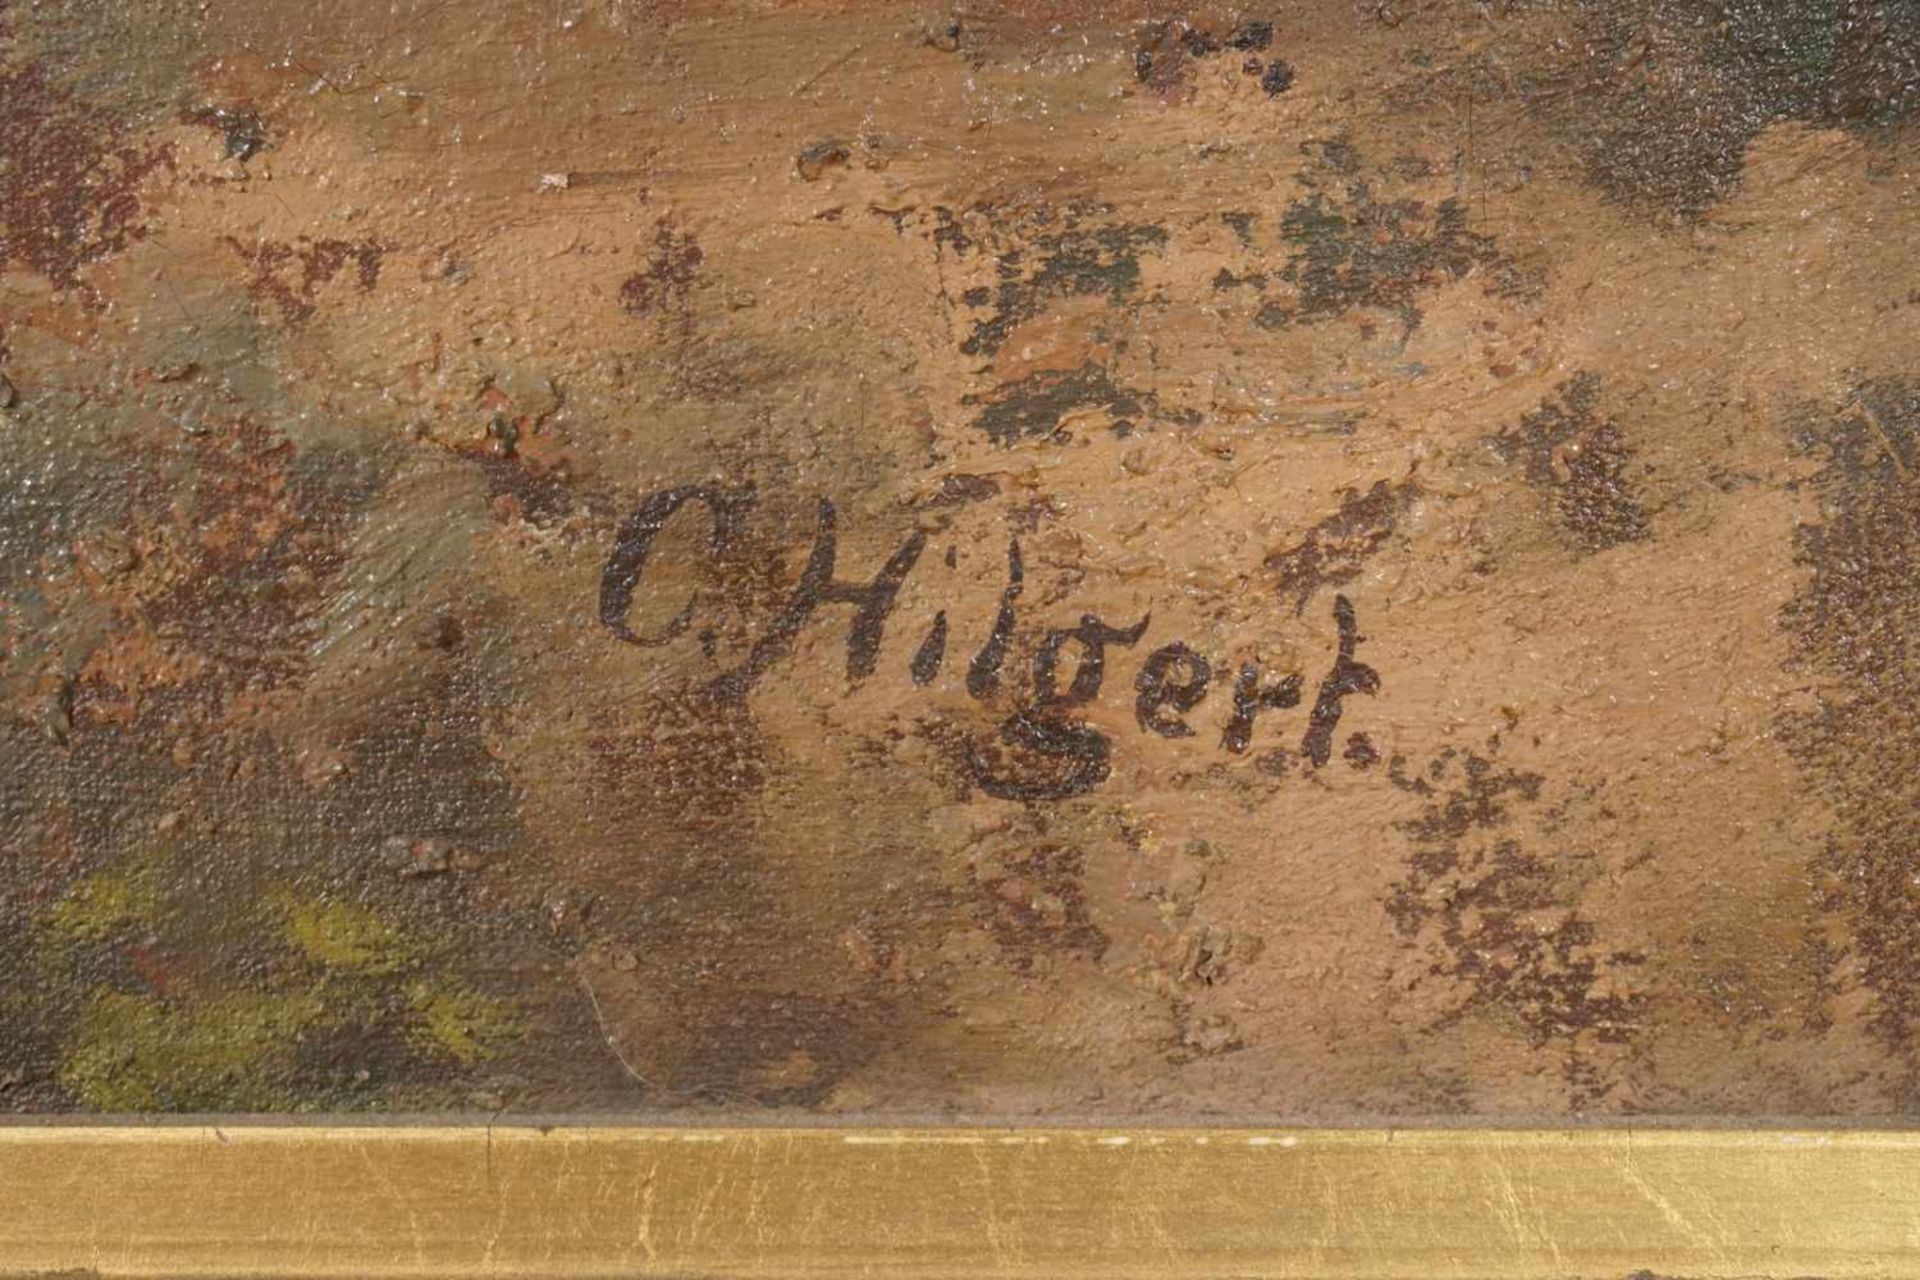 C. Hilgert, "Schafherde mit Hirtem im Gebirge" - Image 4 of 4